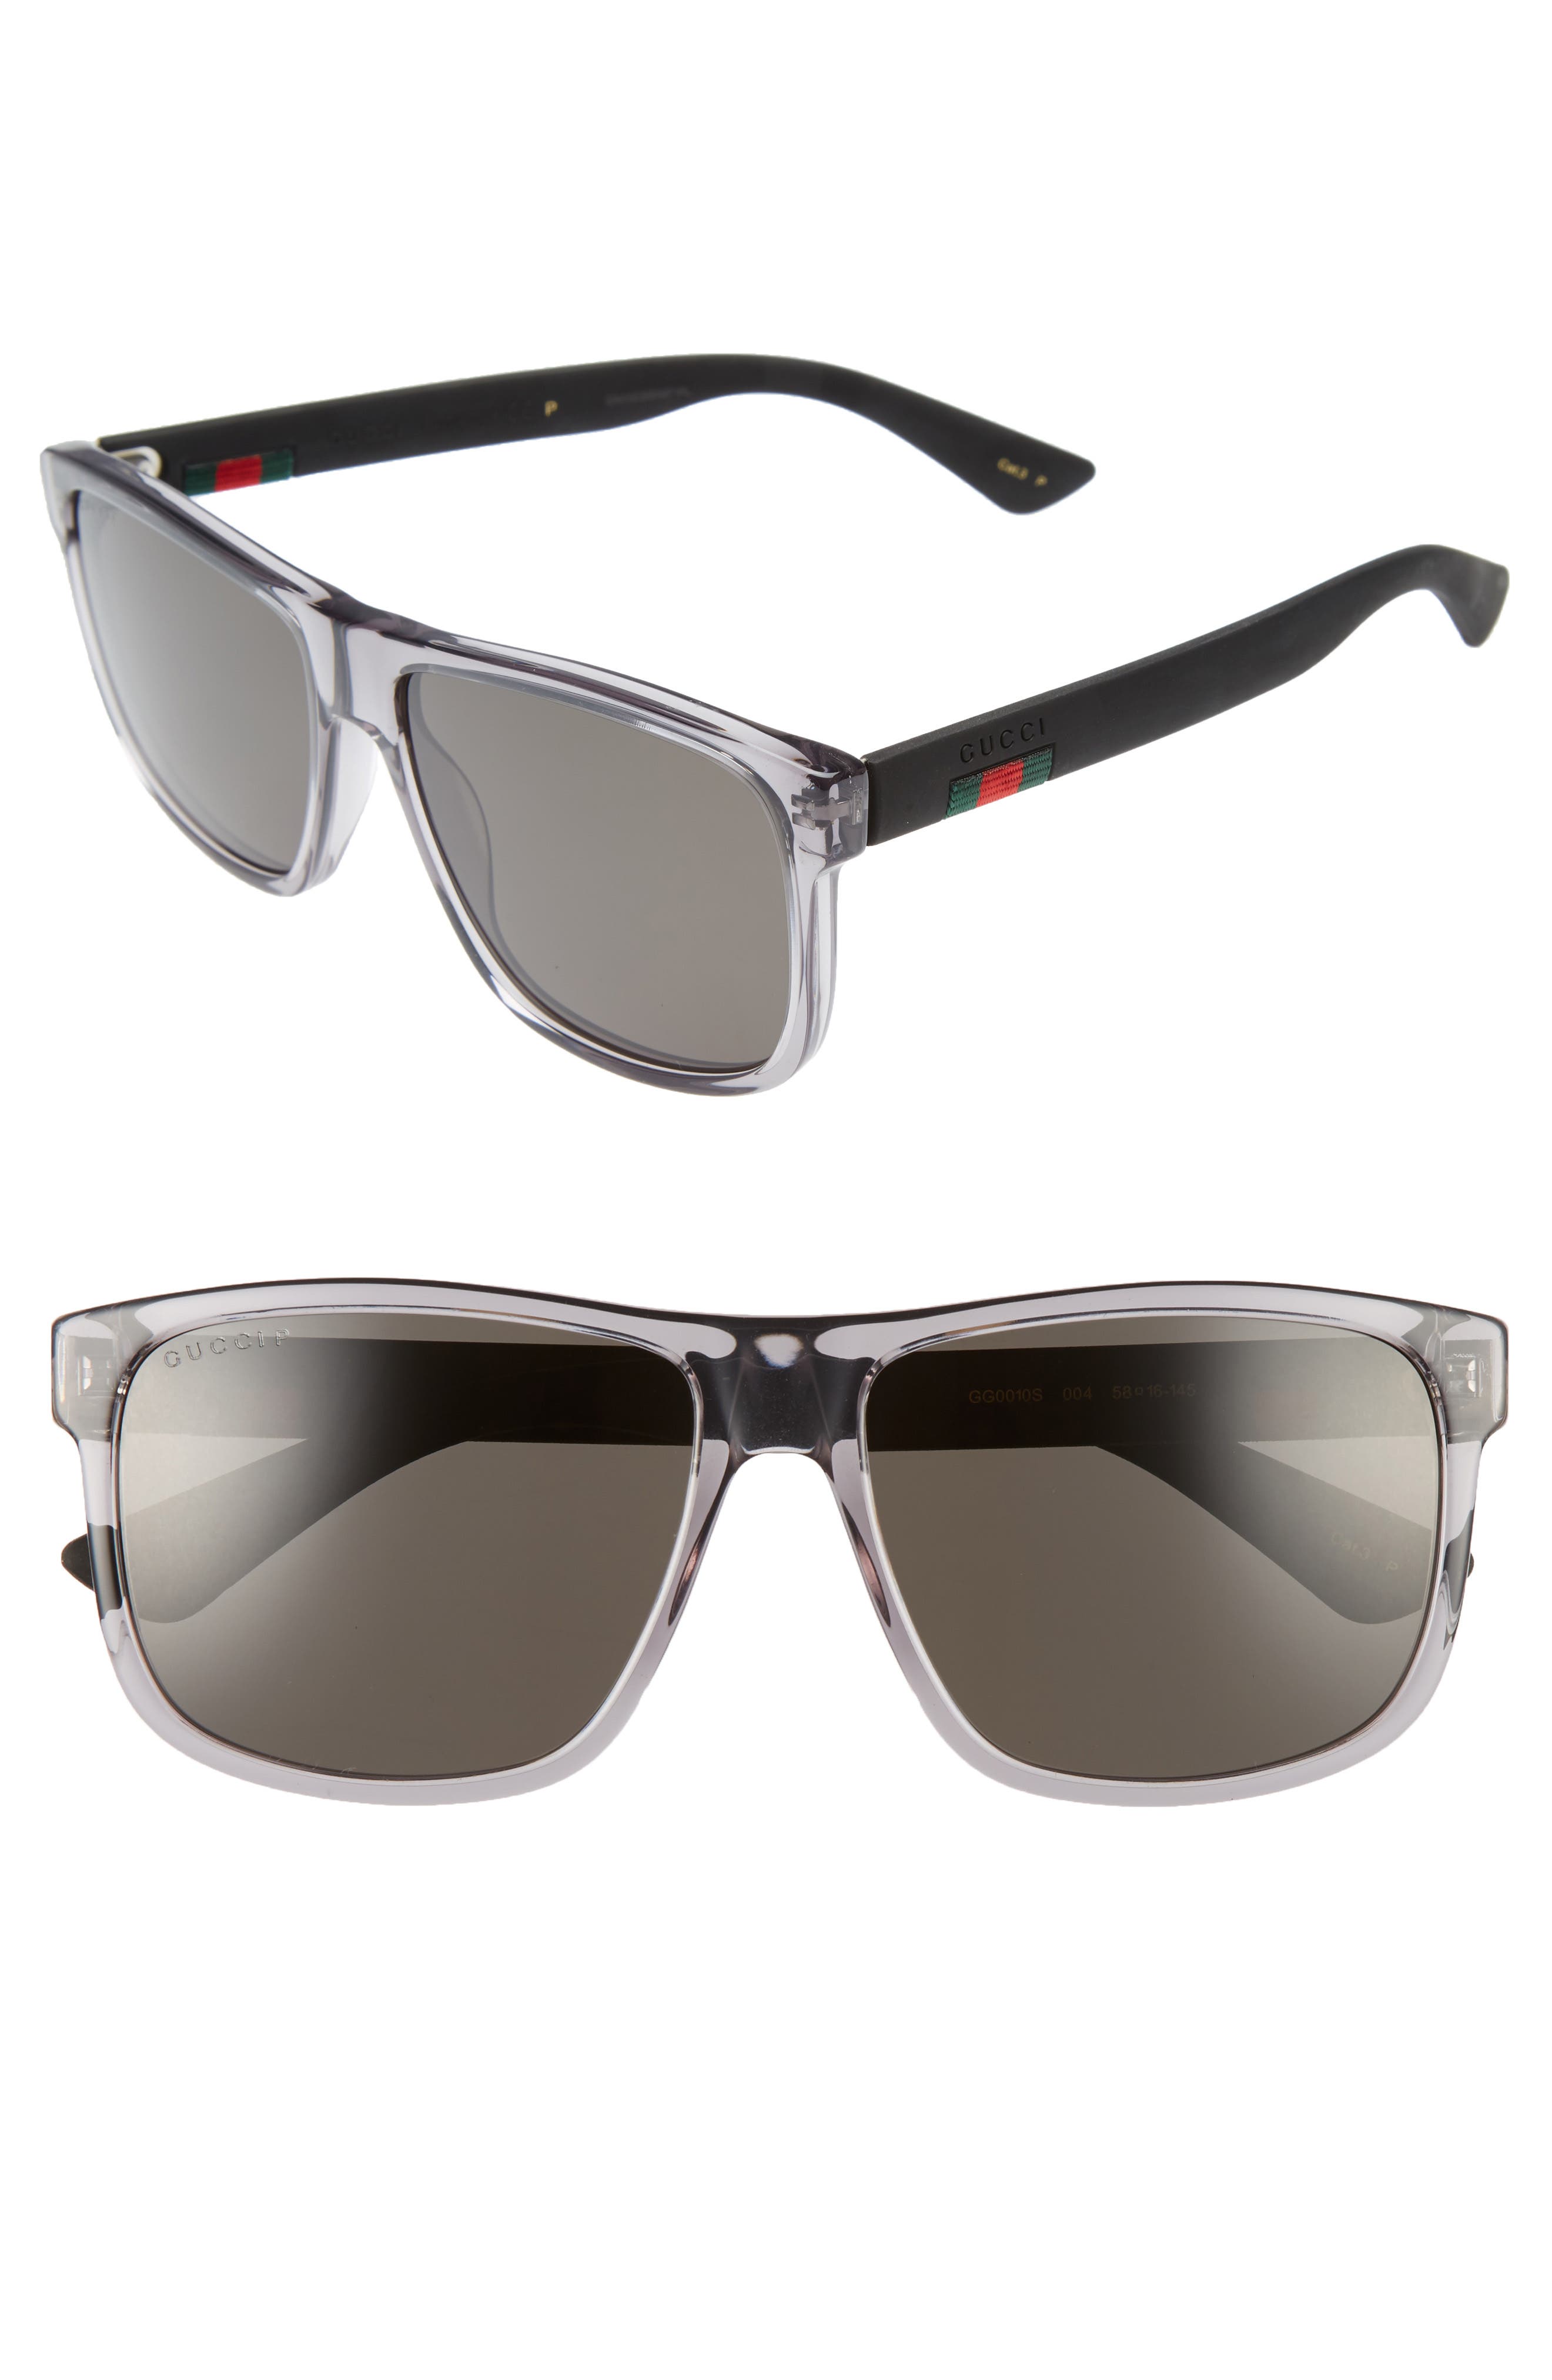 Charles Keasing Fabrikant sprogfærdighed Men's Gucci 58mm Polarized Sunglasses - Transparent Grey W/ Grey Plr |  Smart Closet